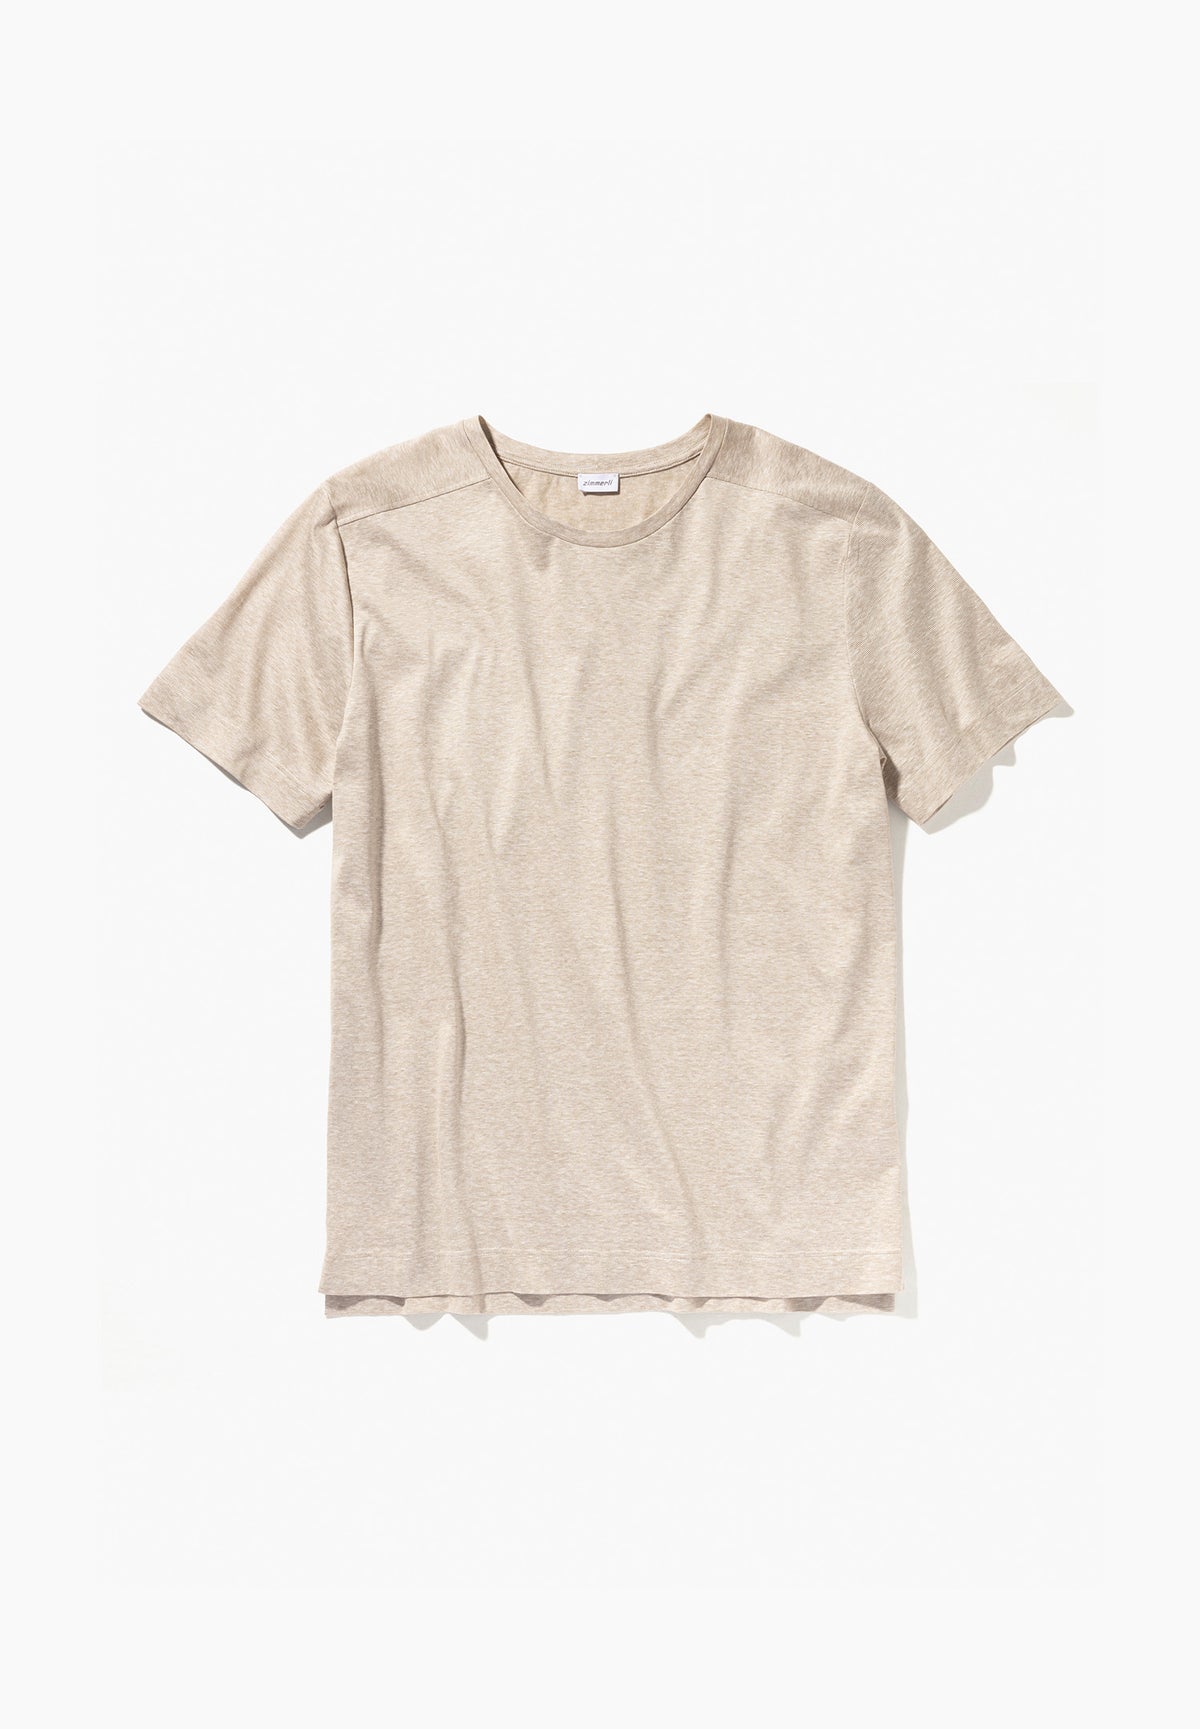 Cotton/Linen Stripes | T-Shirt kurzarm - sand